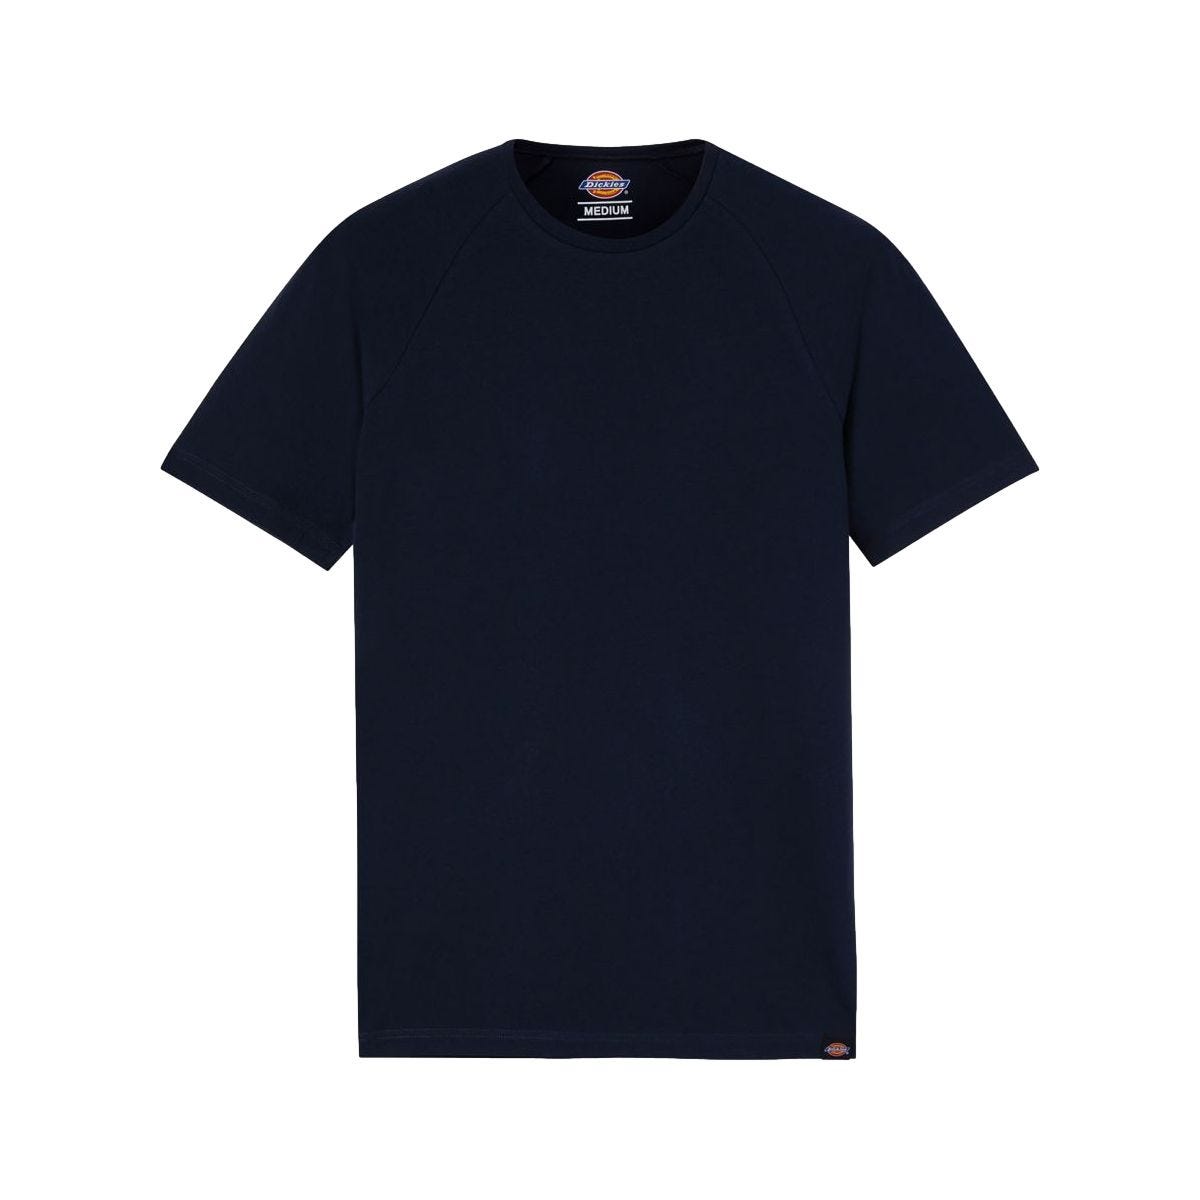 Tee-shirt Temp-IQ Bleu marine - Dickies - Taille 2XL 0